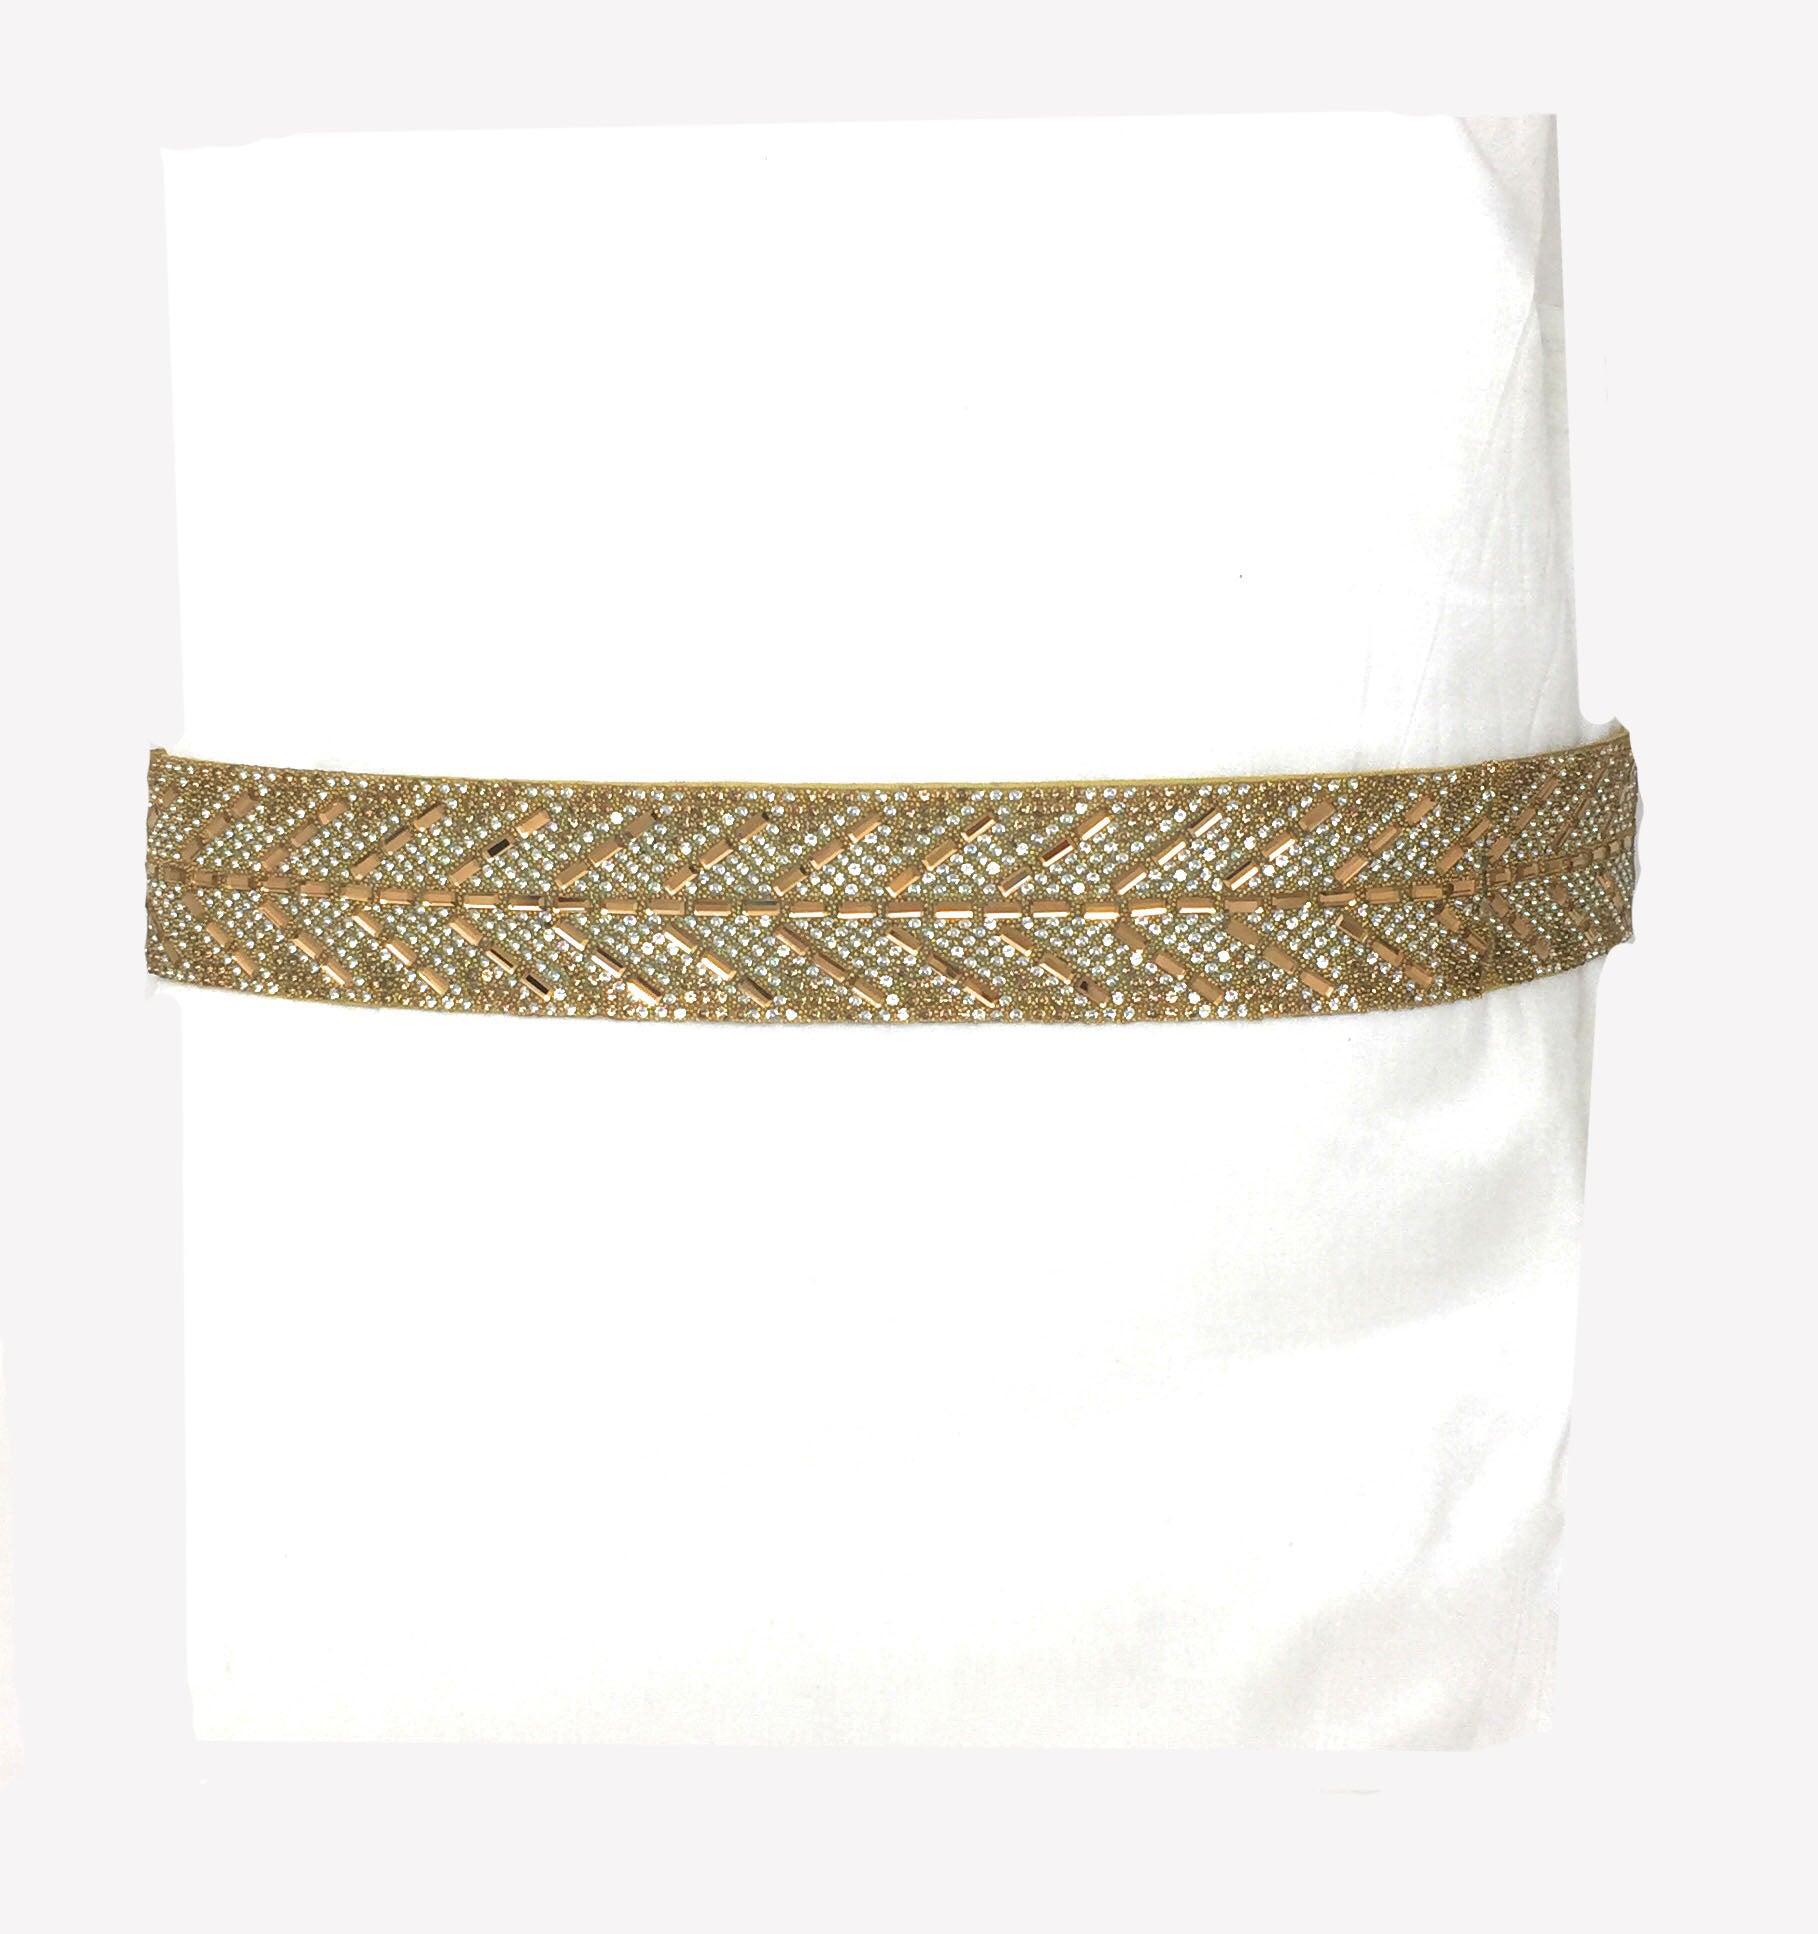 WoW - Waist belt for Silk... - Krishne Blouse & Saree Tassels | Facebook